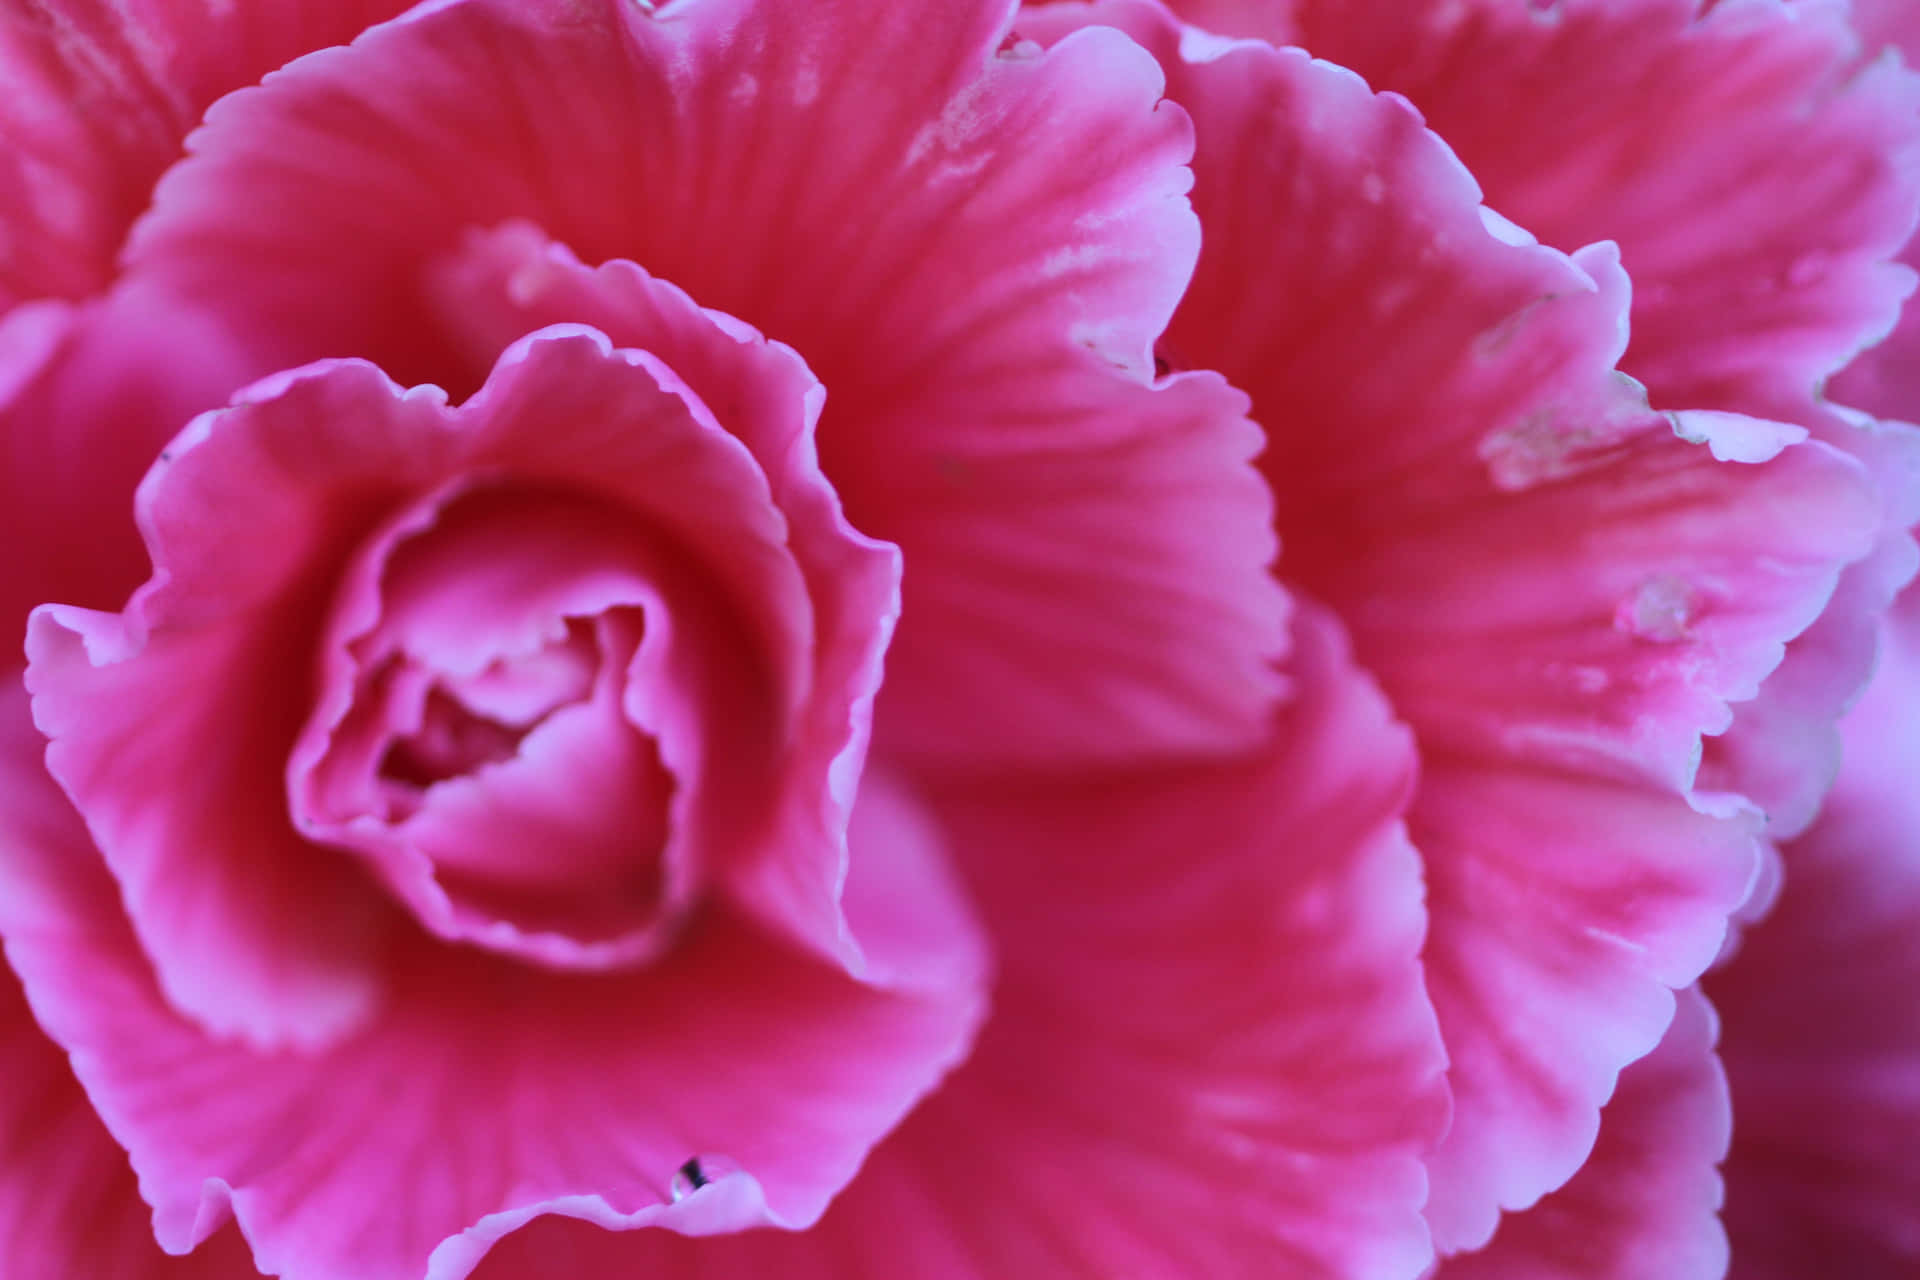 A delicate beauty - a carnation in full bloom